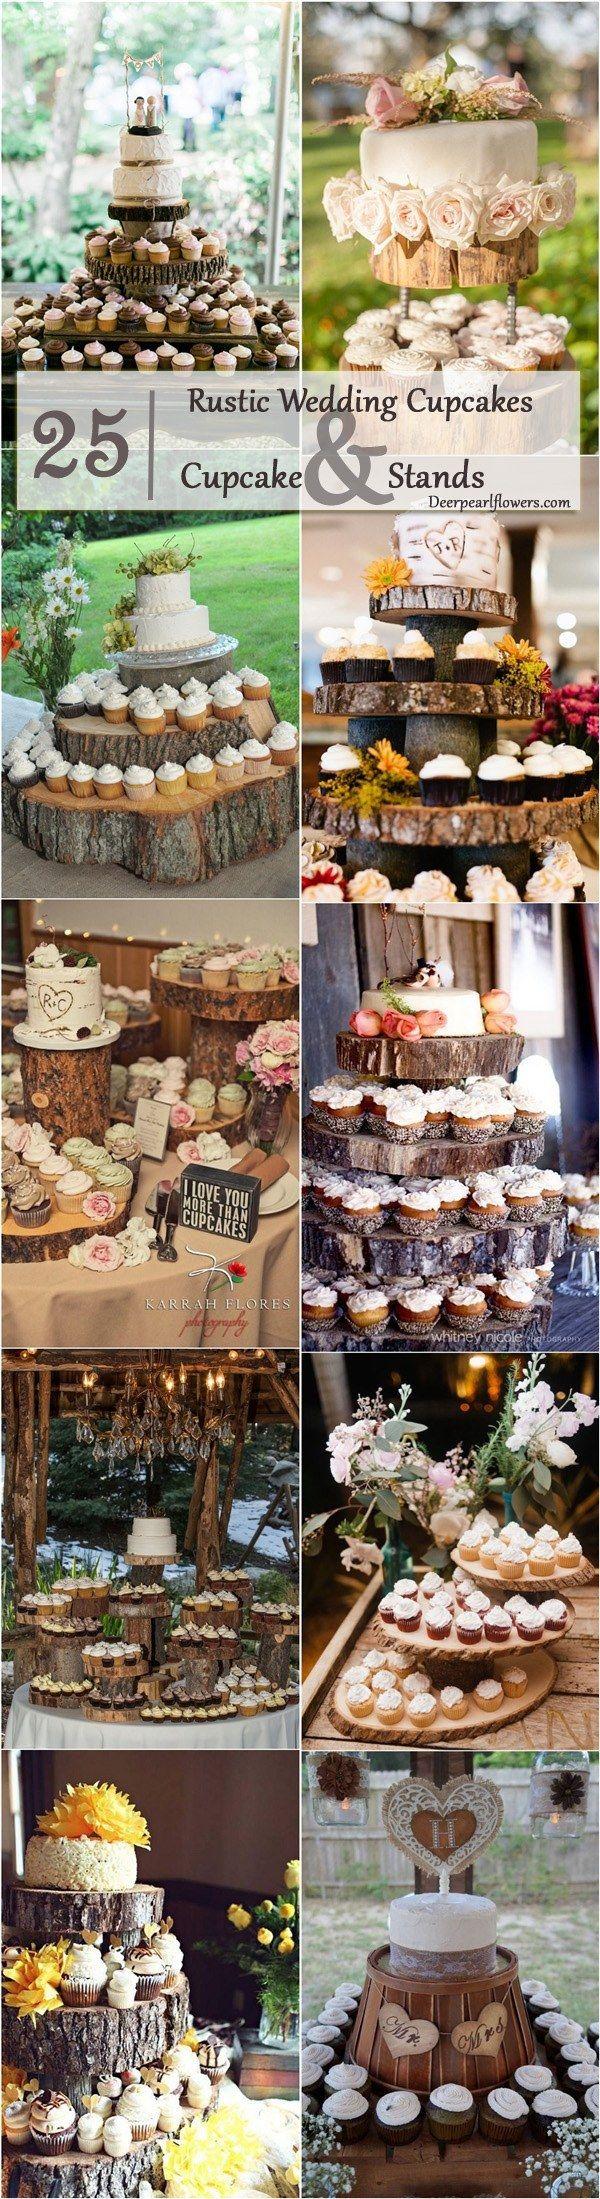 زفاف - 25 Amazing Rustic Wedding Cupcakes & Stands